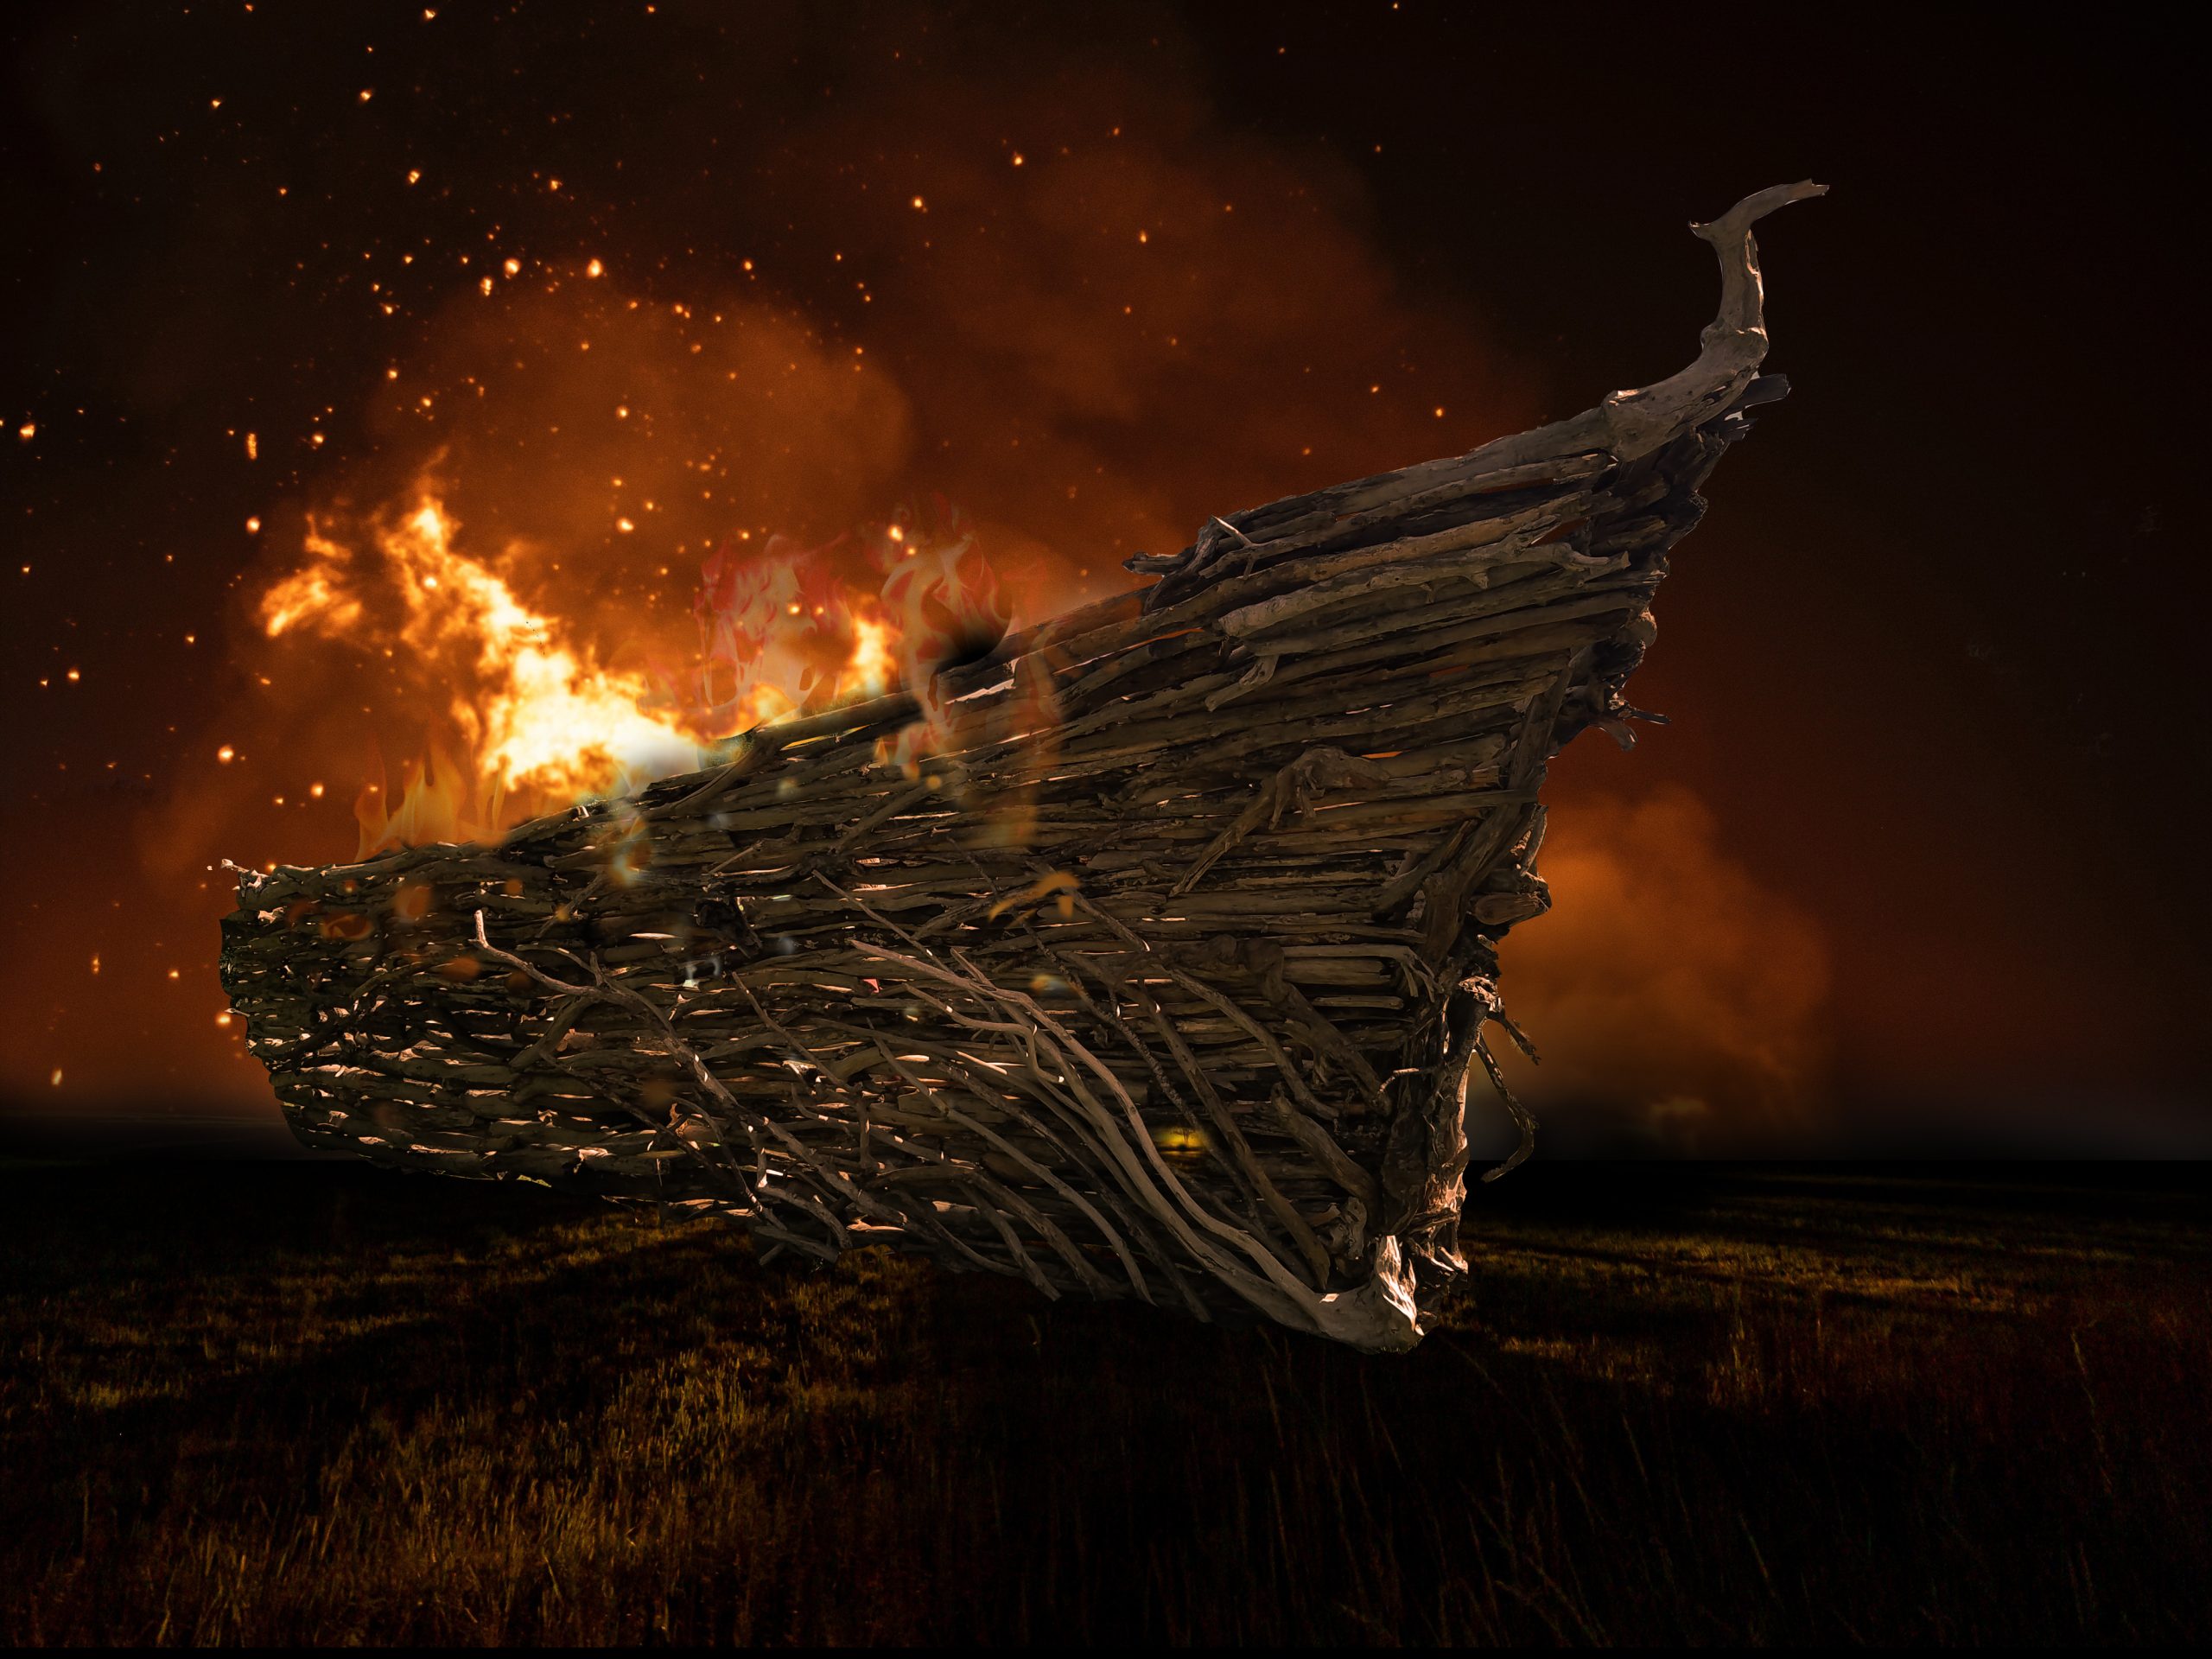 Adrift on fire - a digital reproduction by Judy Cotton & Digi design group